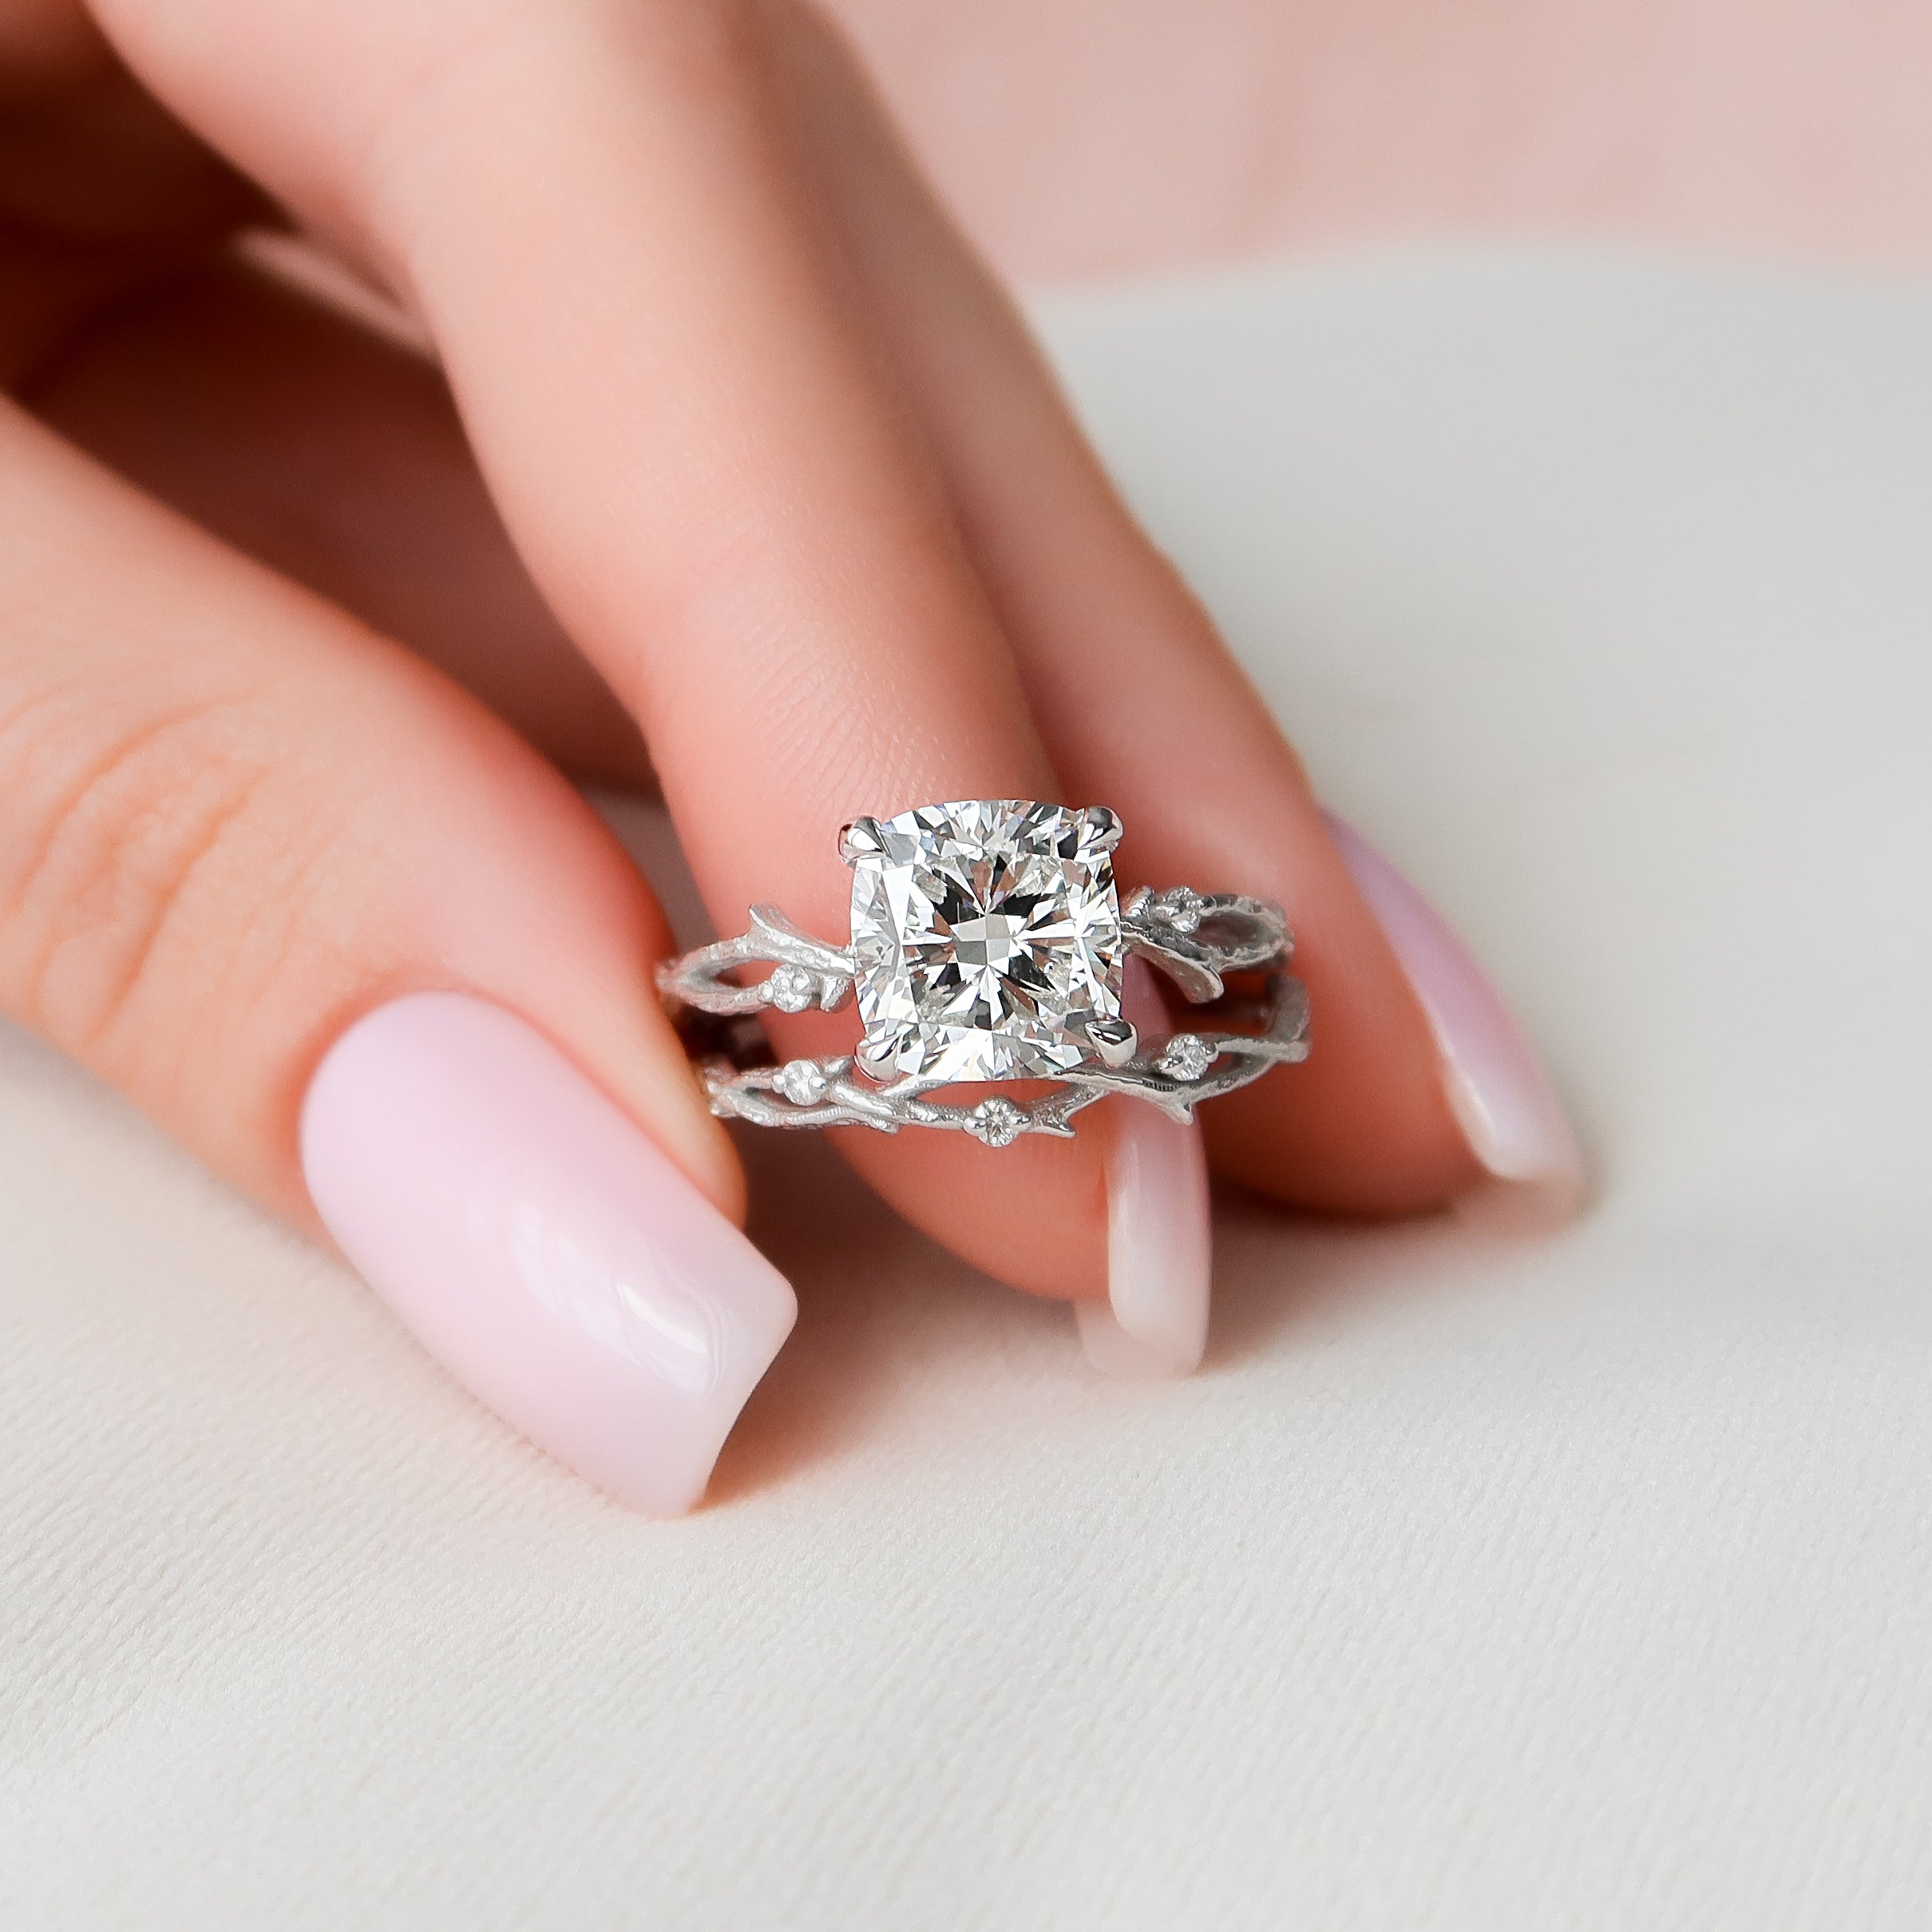 Buy 100+ Wedding Rings Online | BlueStone.com - India's #1 Online Jewellery  Brand